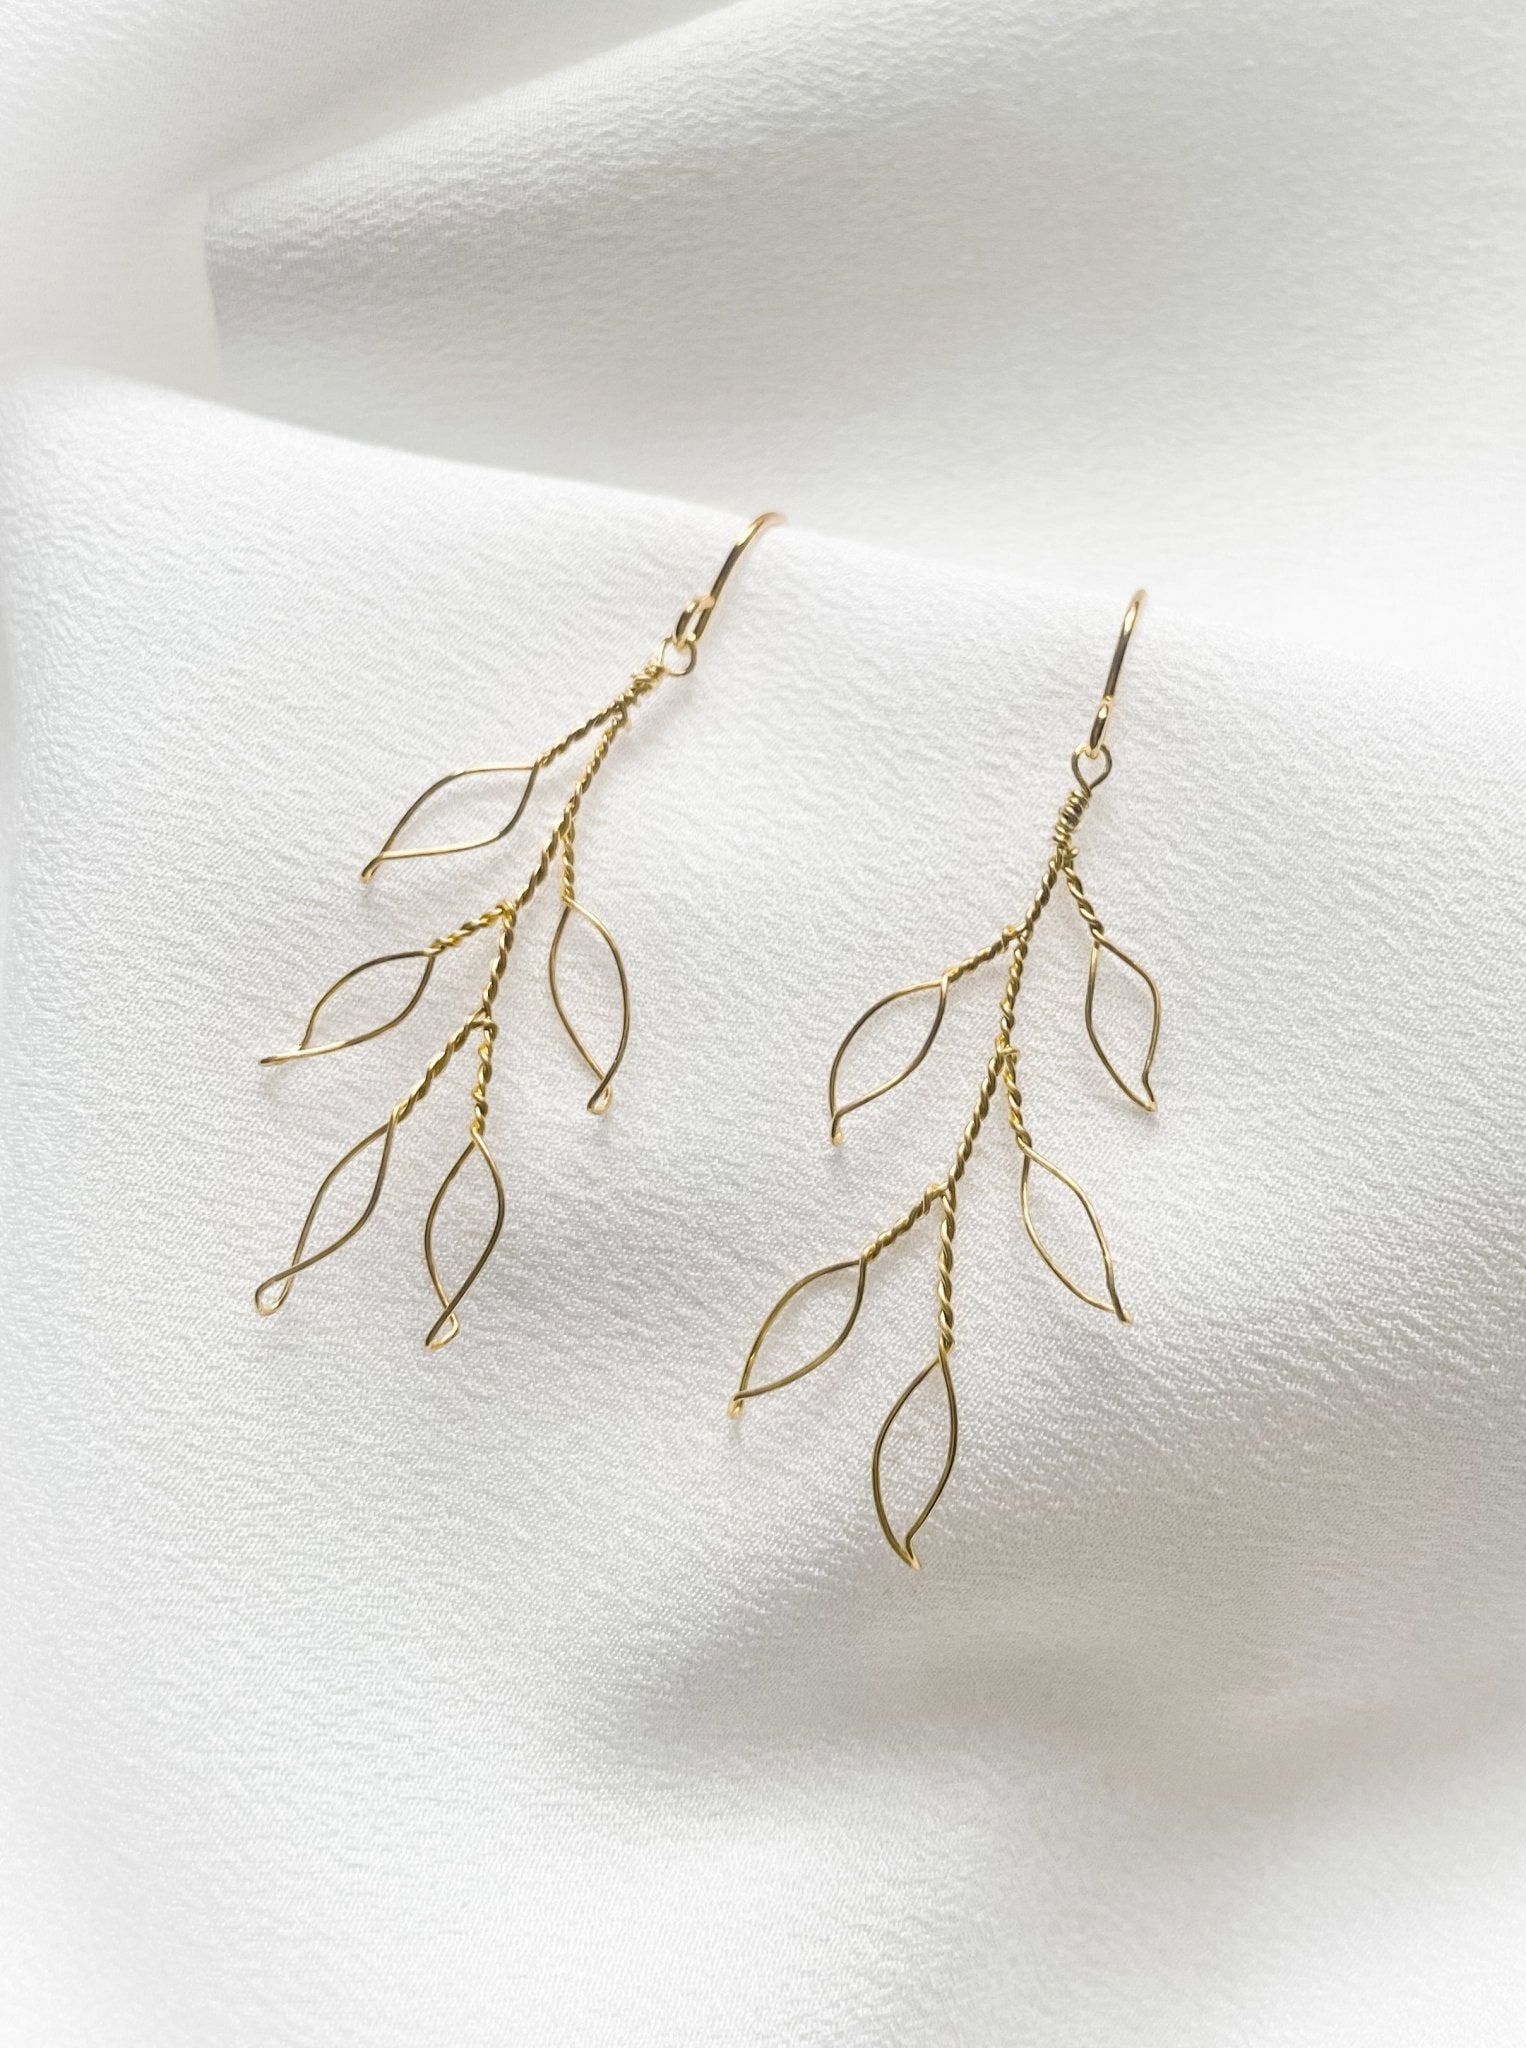 Neve delicate gold wire leaf earrings debbiecarlisle.com £35